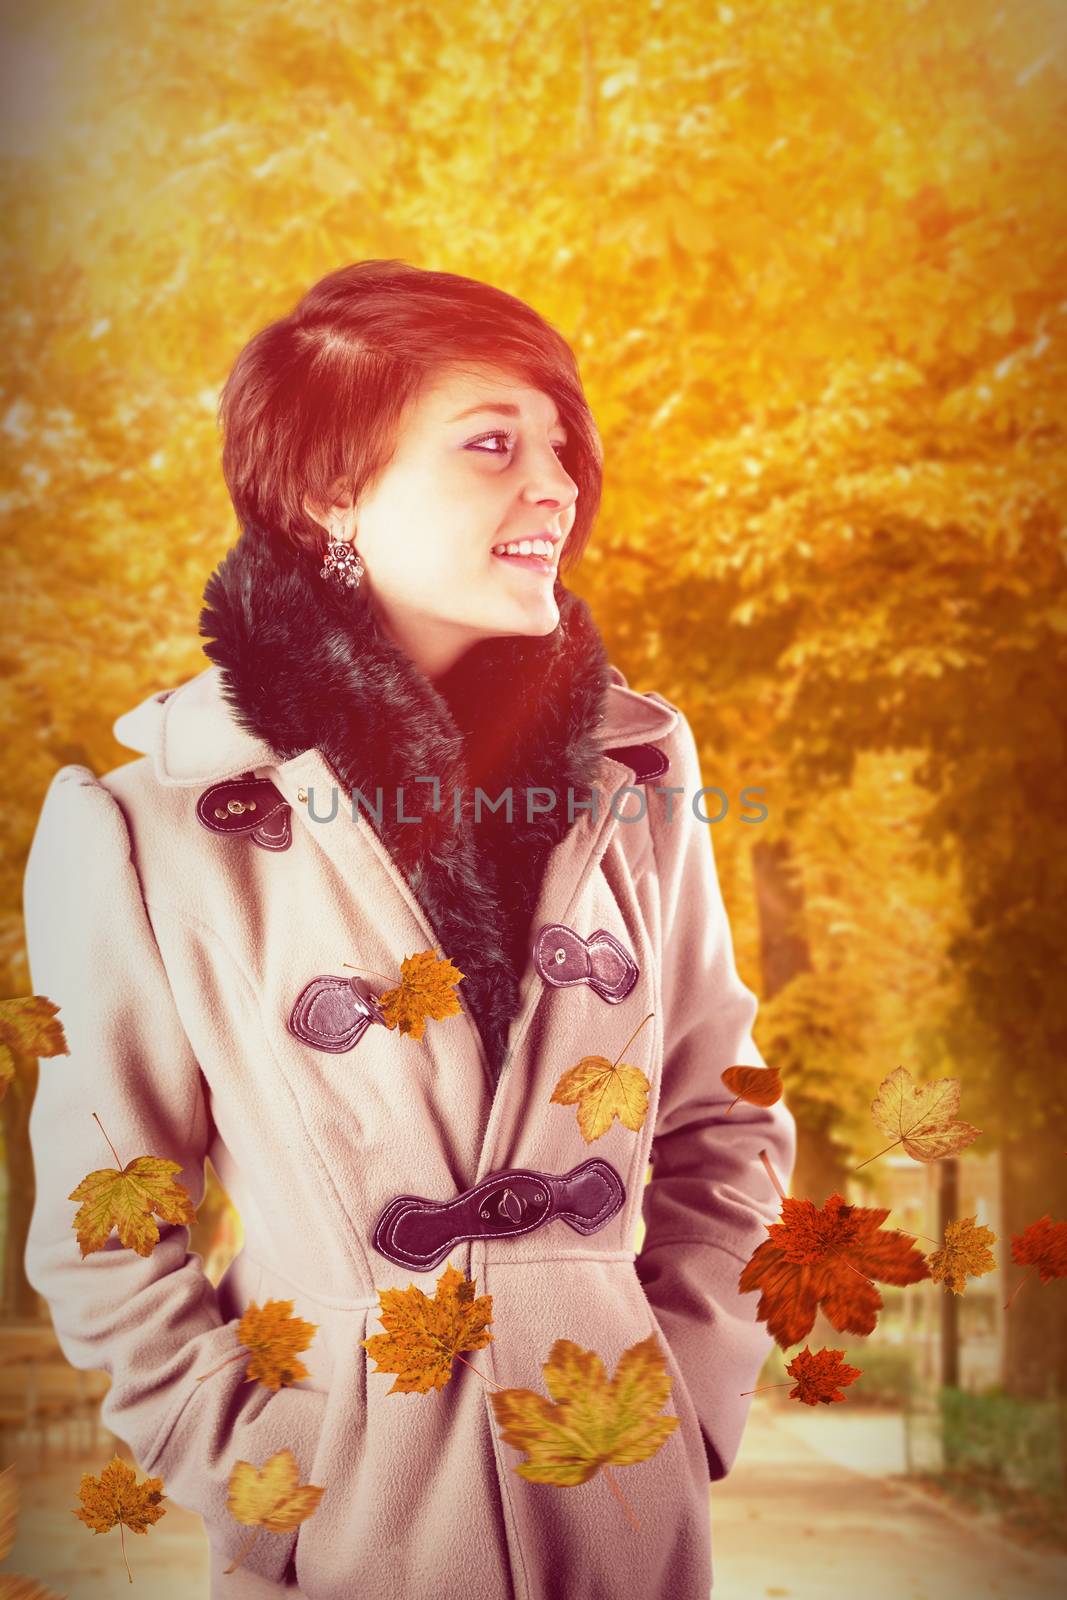 Smiling beautiful woman in winter coat against autumn scene